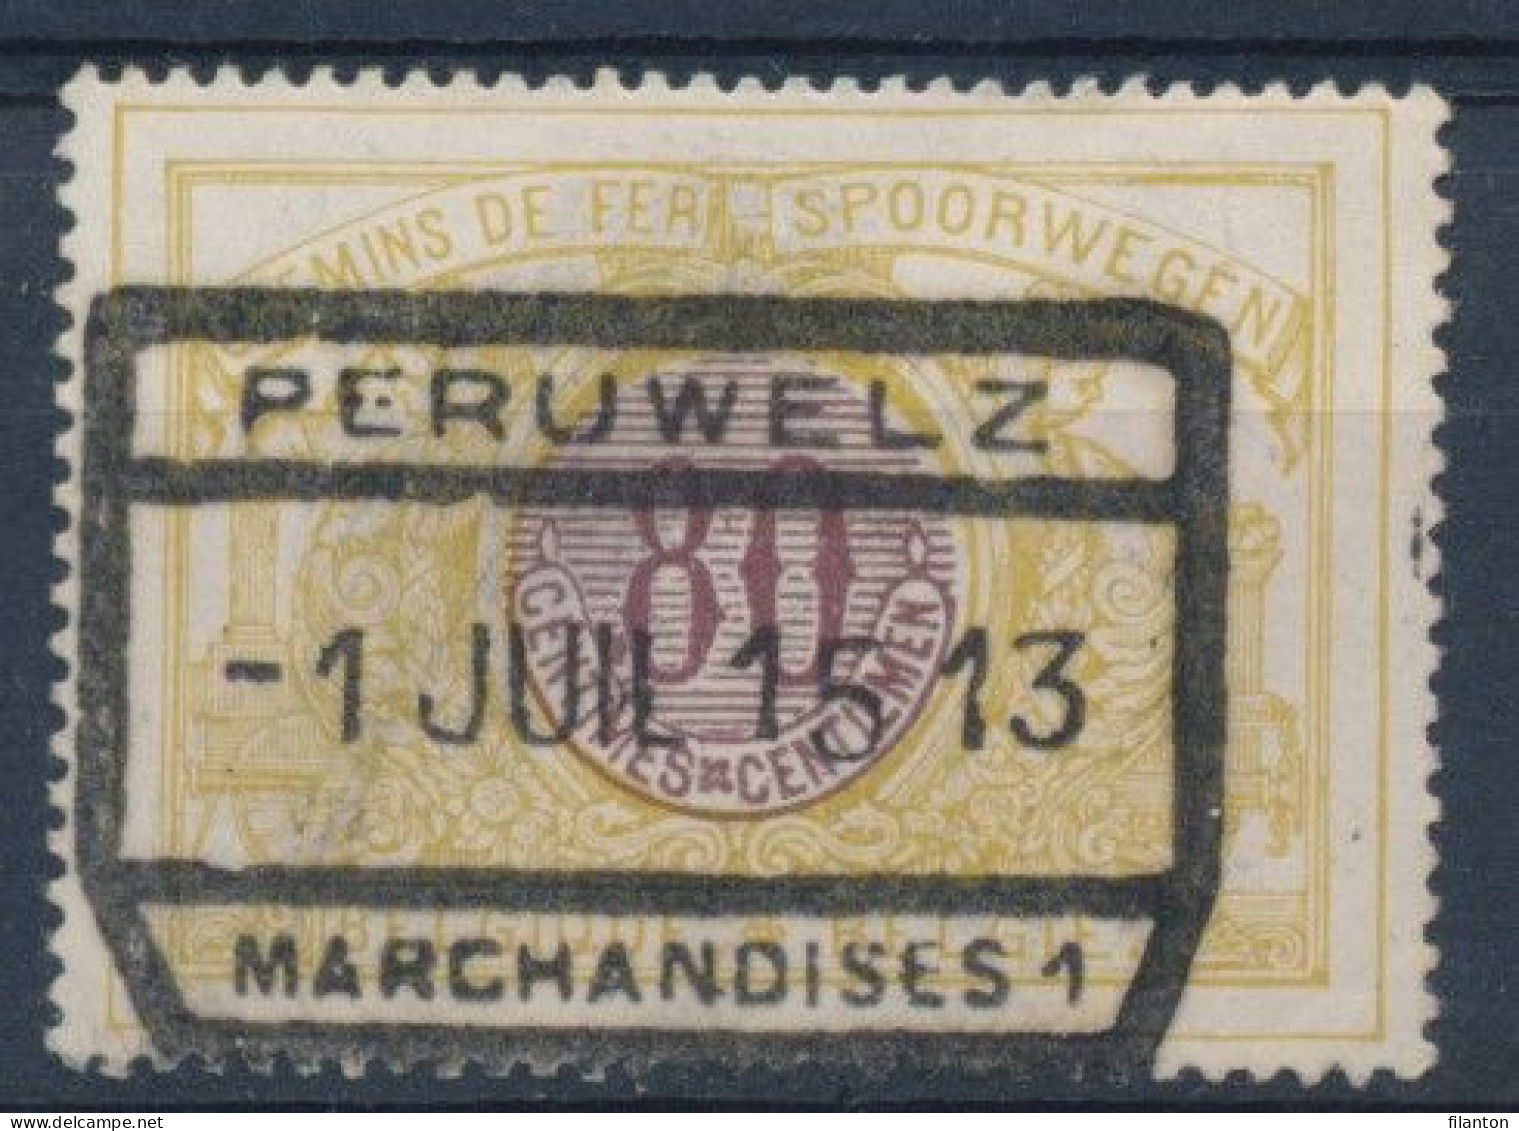 TR  39 - "PERUWELZ - MARCHANDISES 1" - (ref. 37.529) - Used